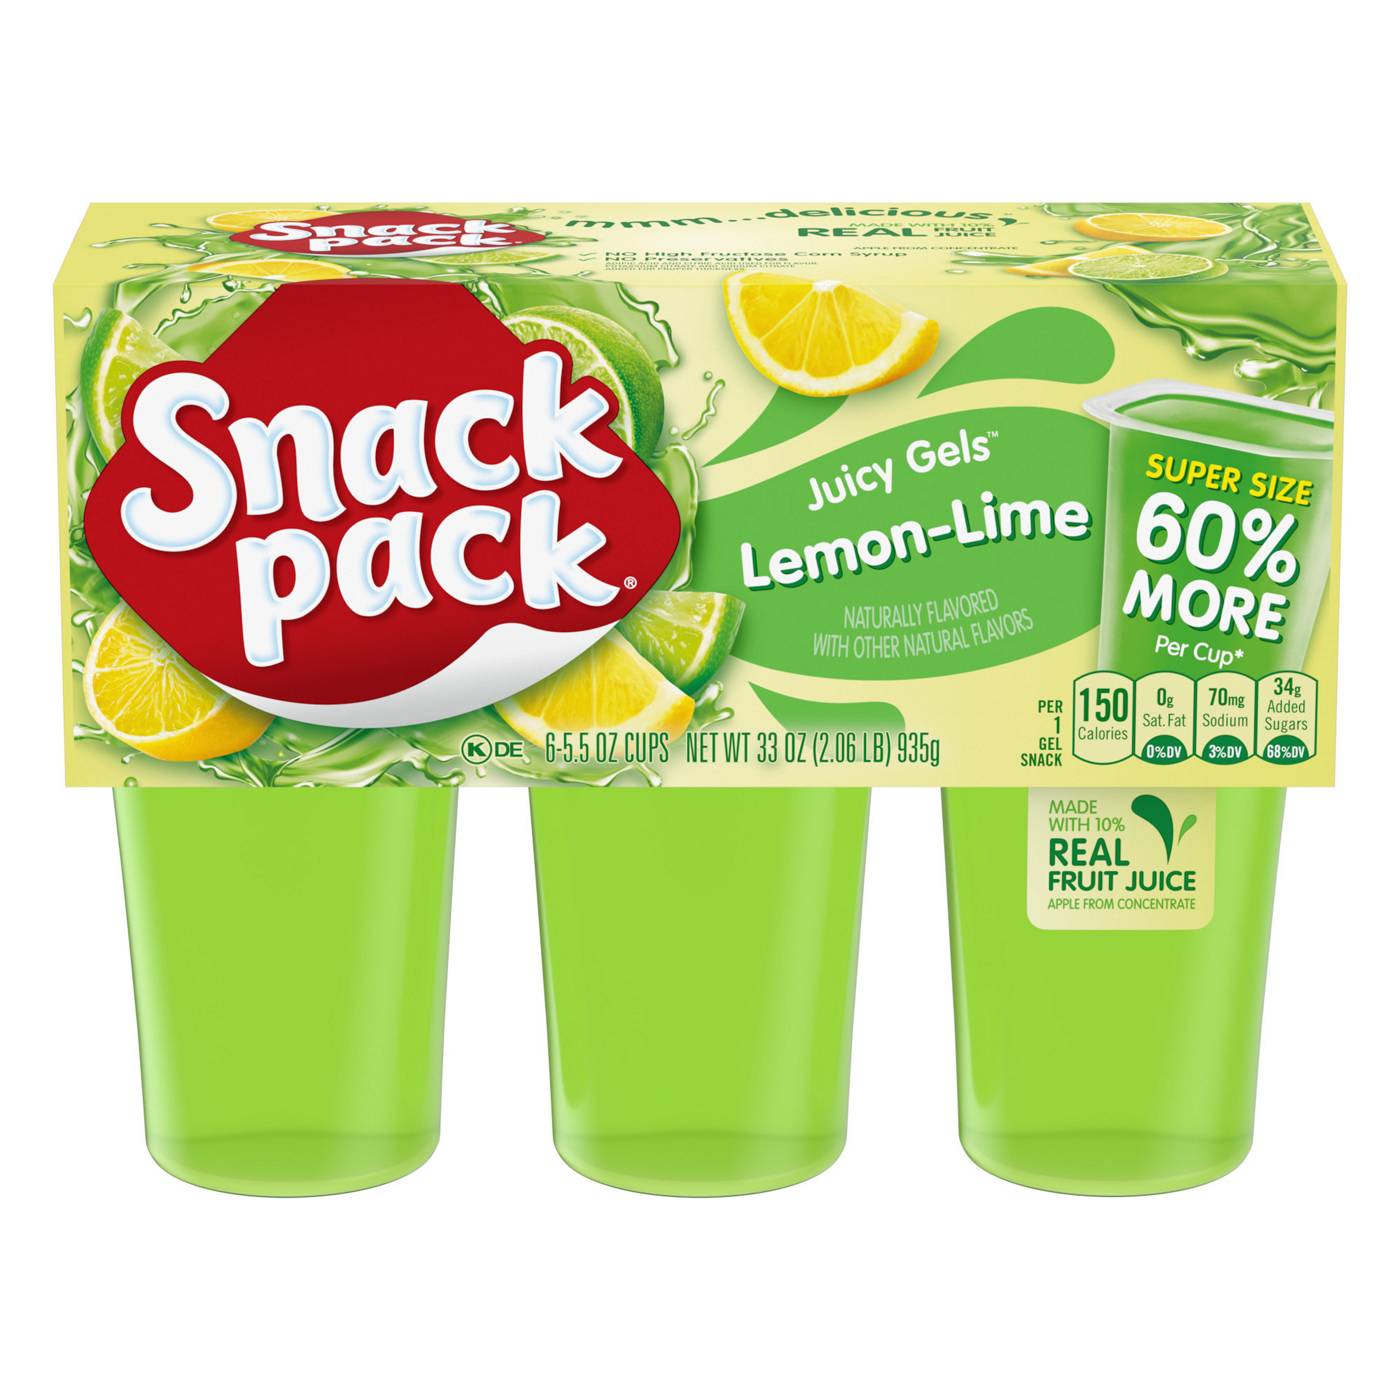 Snack Pack Super Size Lemon-Lime Juicy Gels Cups; image 1 of 3